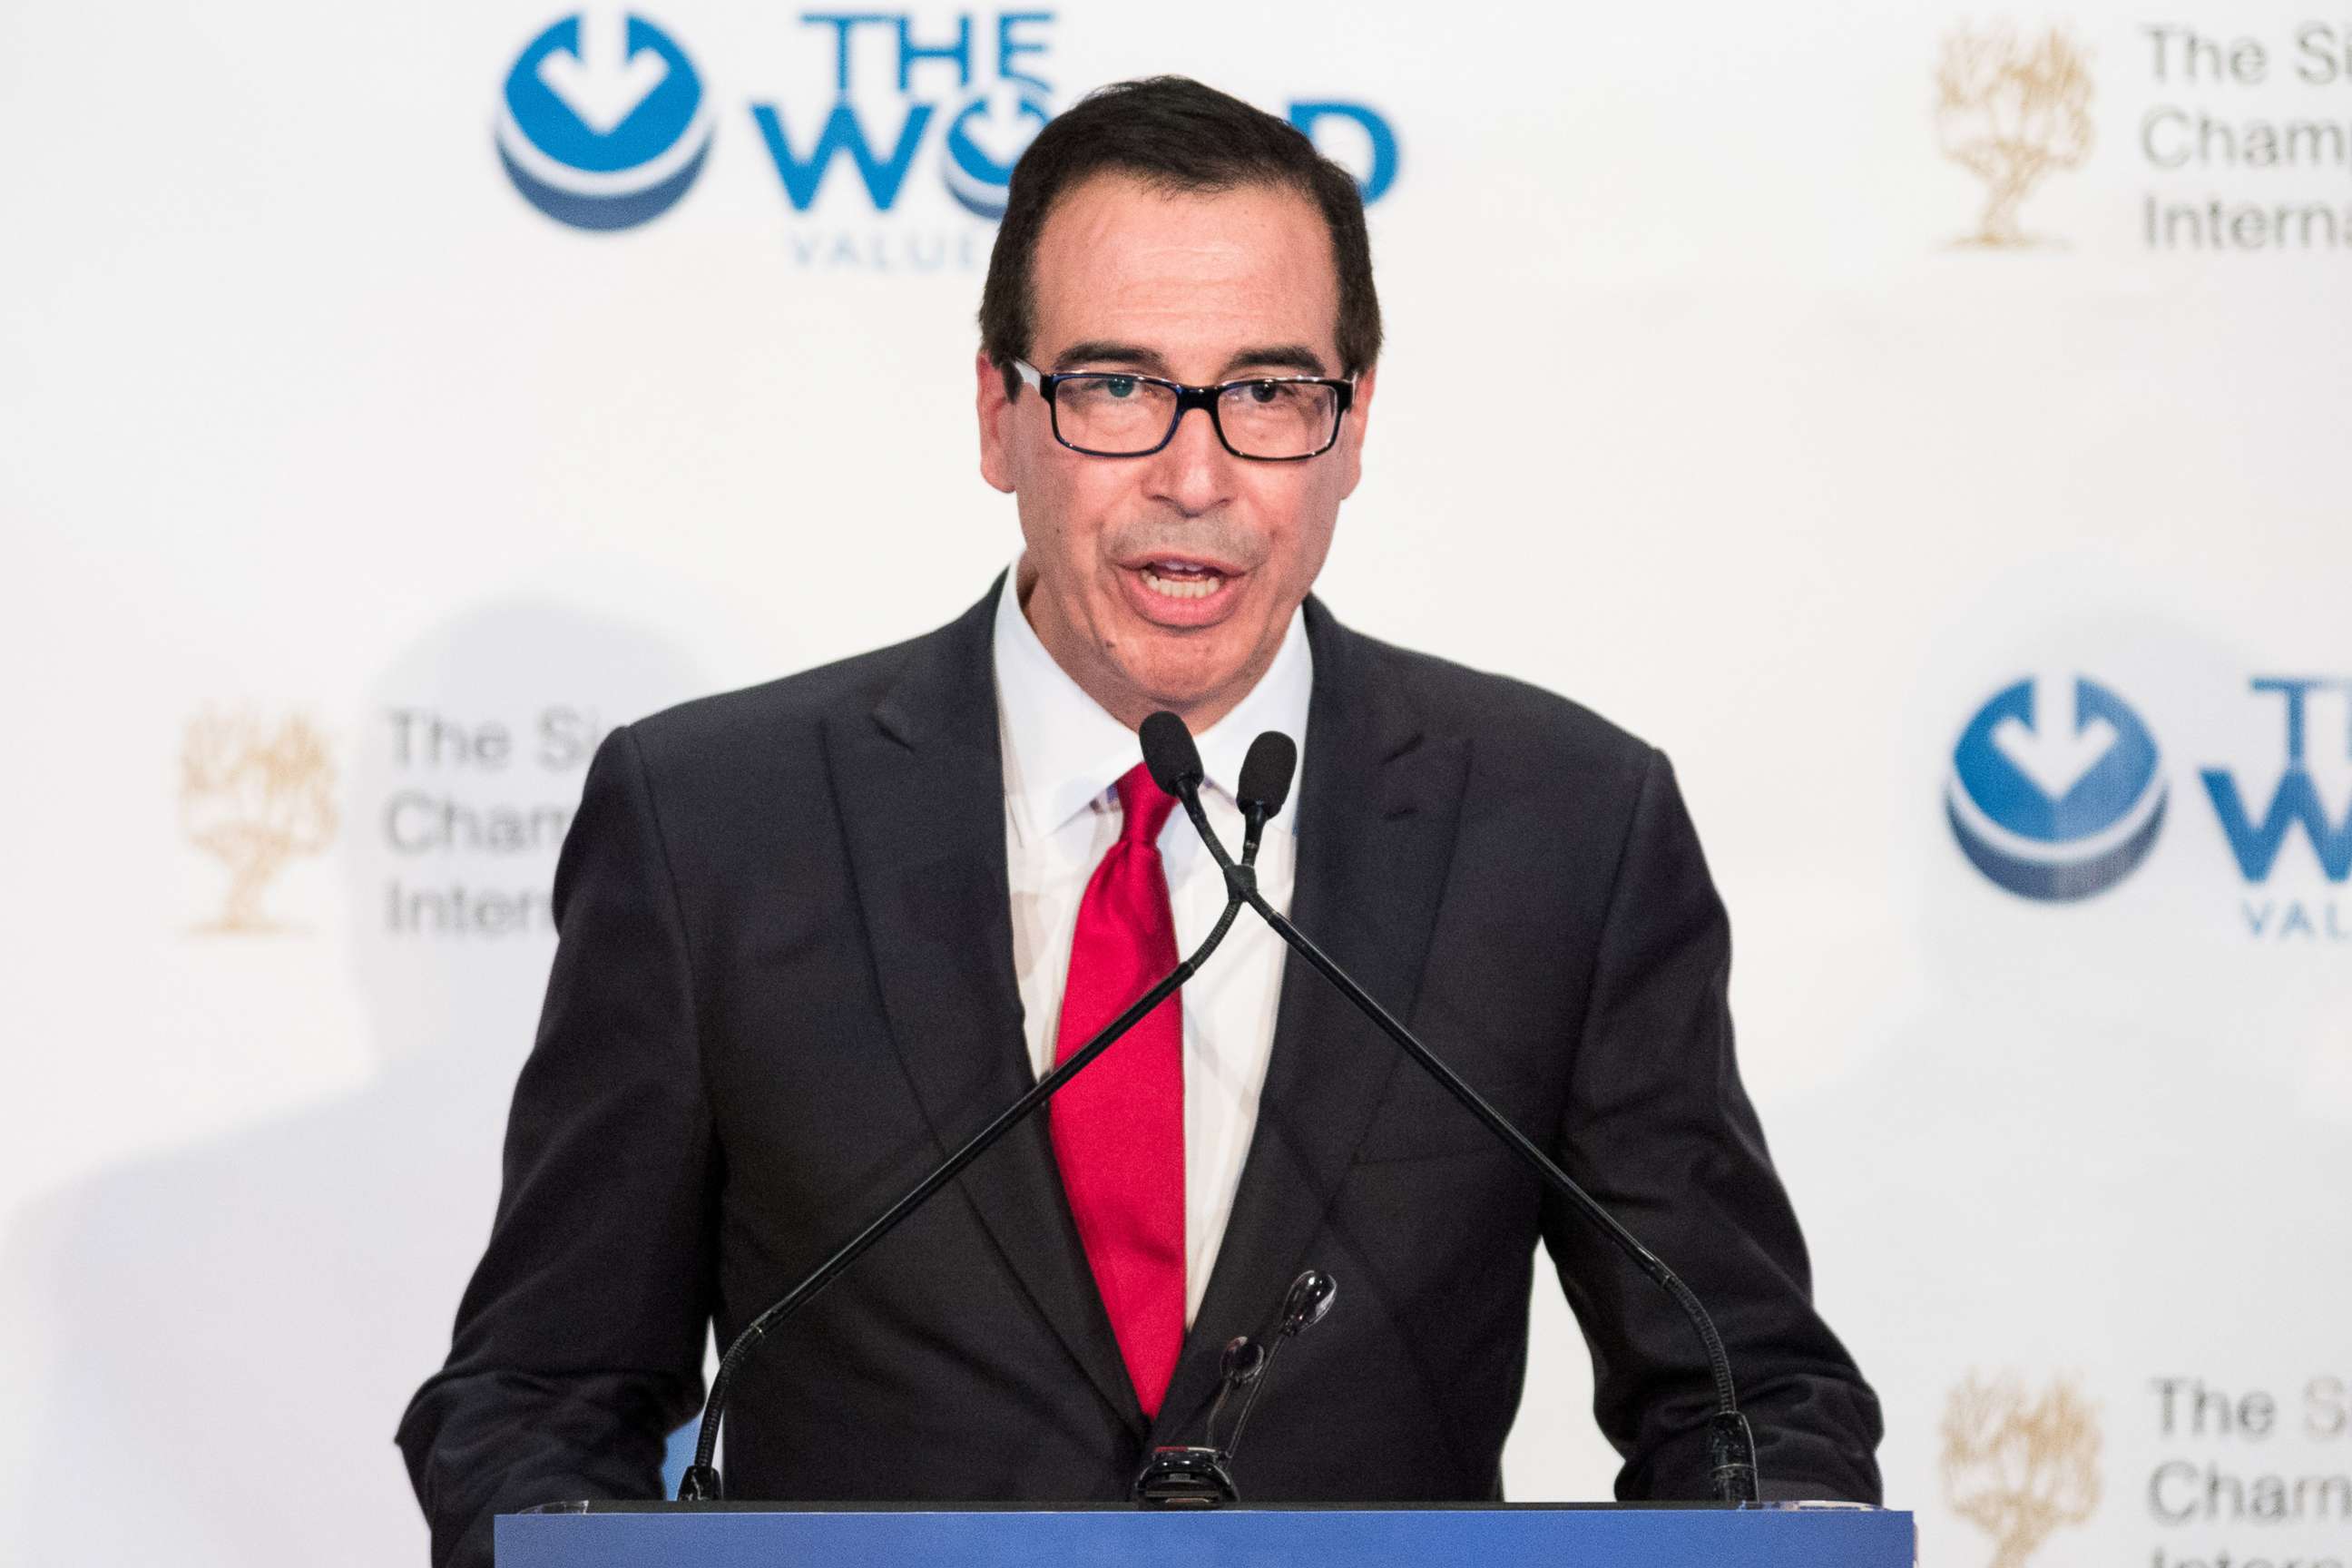 PHOTO: Steven Mnuchin, Secretary of the Treasury, speaking at the Champions of Jewish Values International Awards Gala in New York City, March 8, 2018.